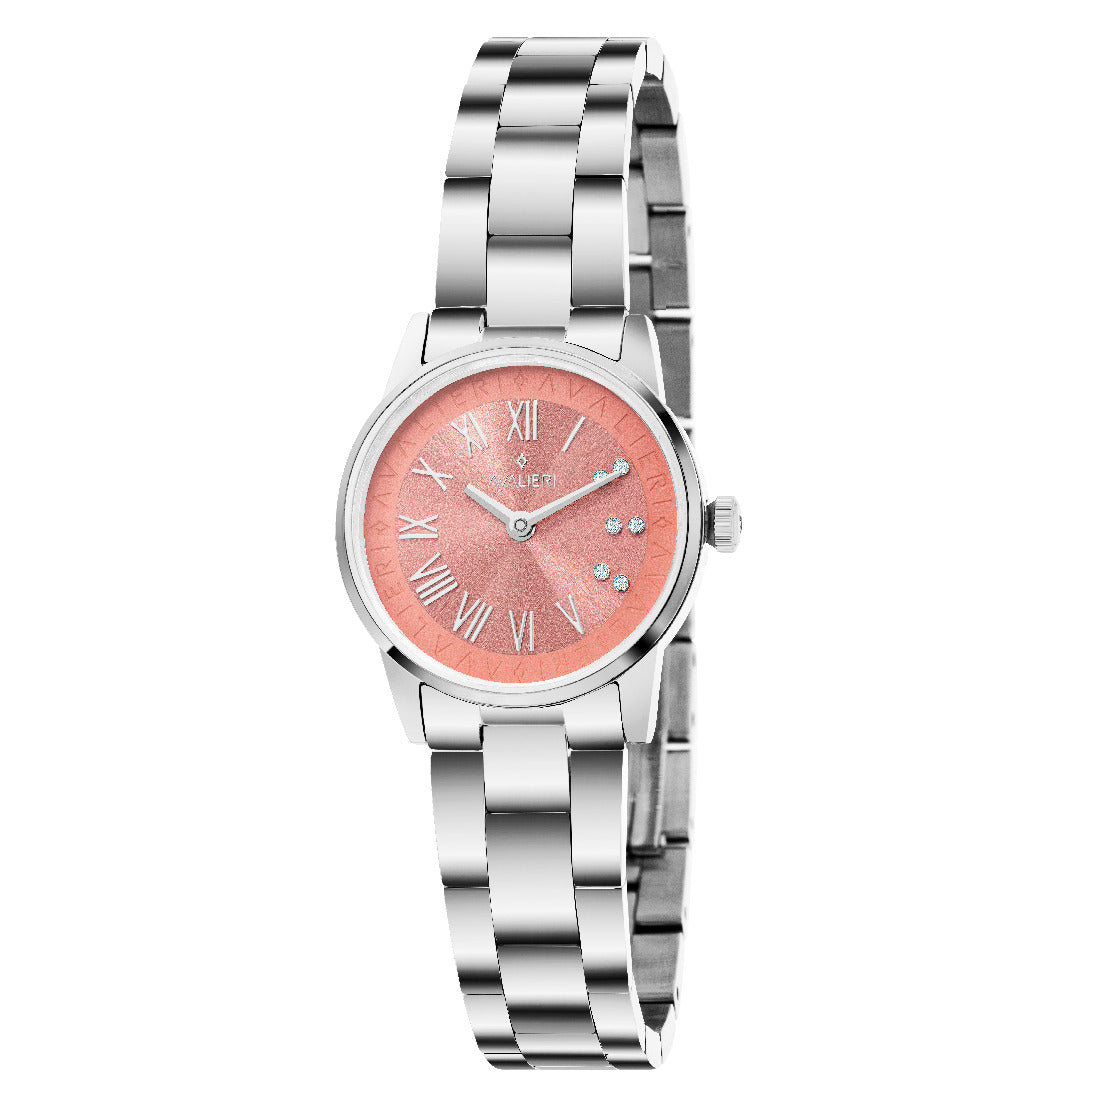 Avalieri Women's Quartz Watch Pink Dial - AV-2498B